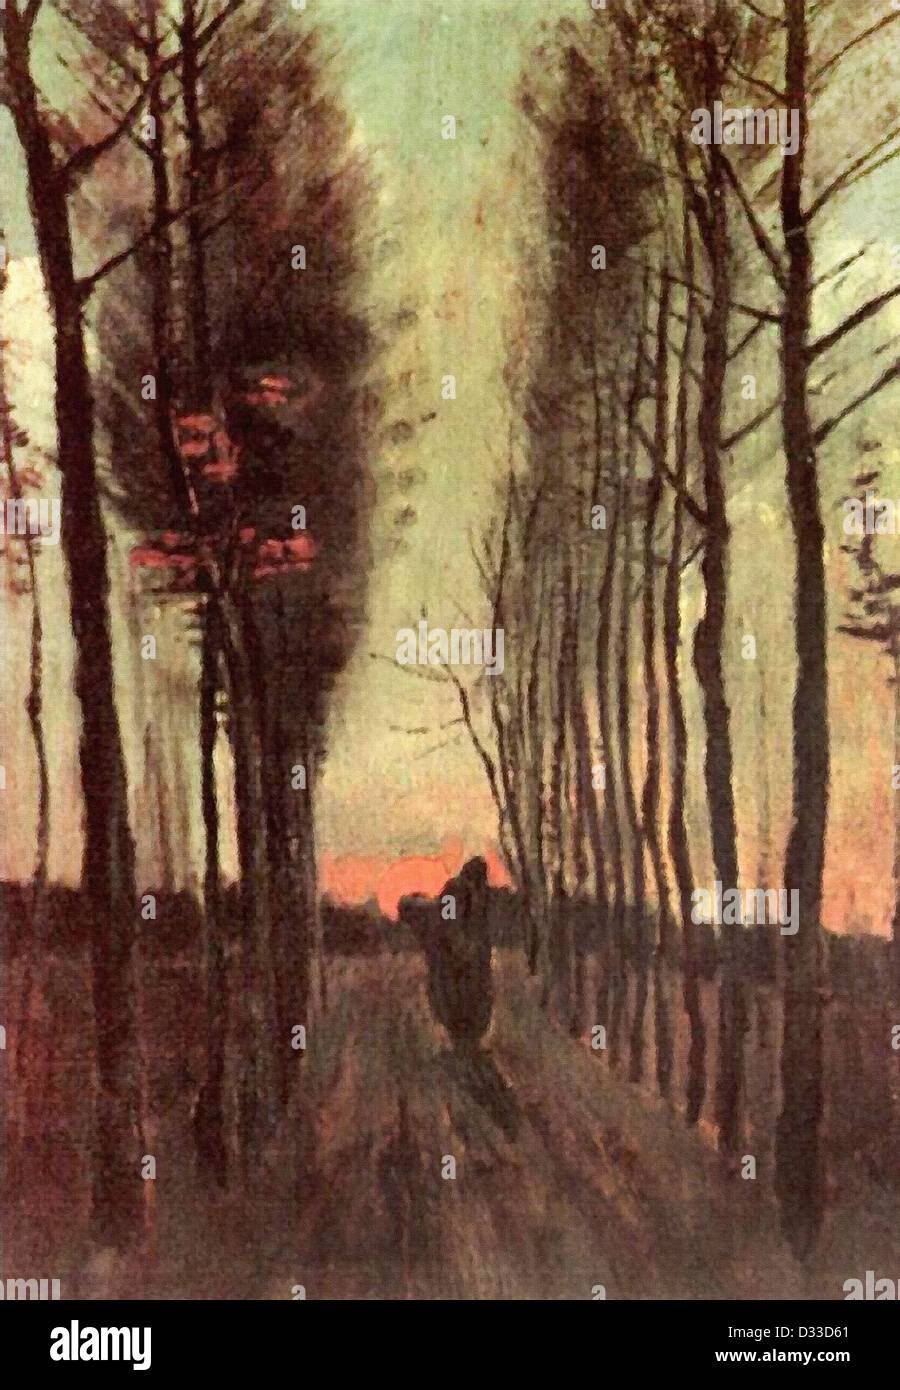 Vincent van Gogh: Avenue of Poplars at Sunset. 1884. Oil on canvas. Rijksmuseum Kröller-Müller, Otterlo, Netherlands. Realism. Stock Photo